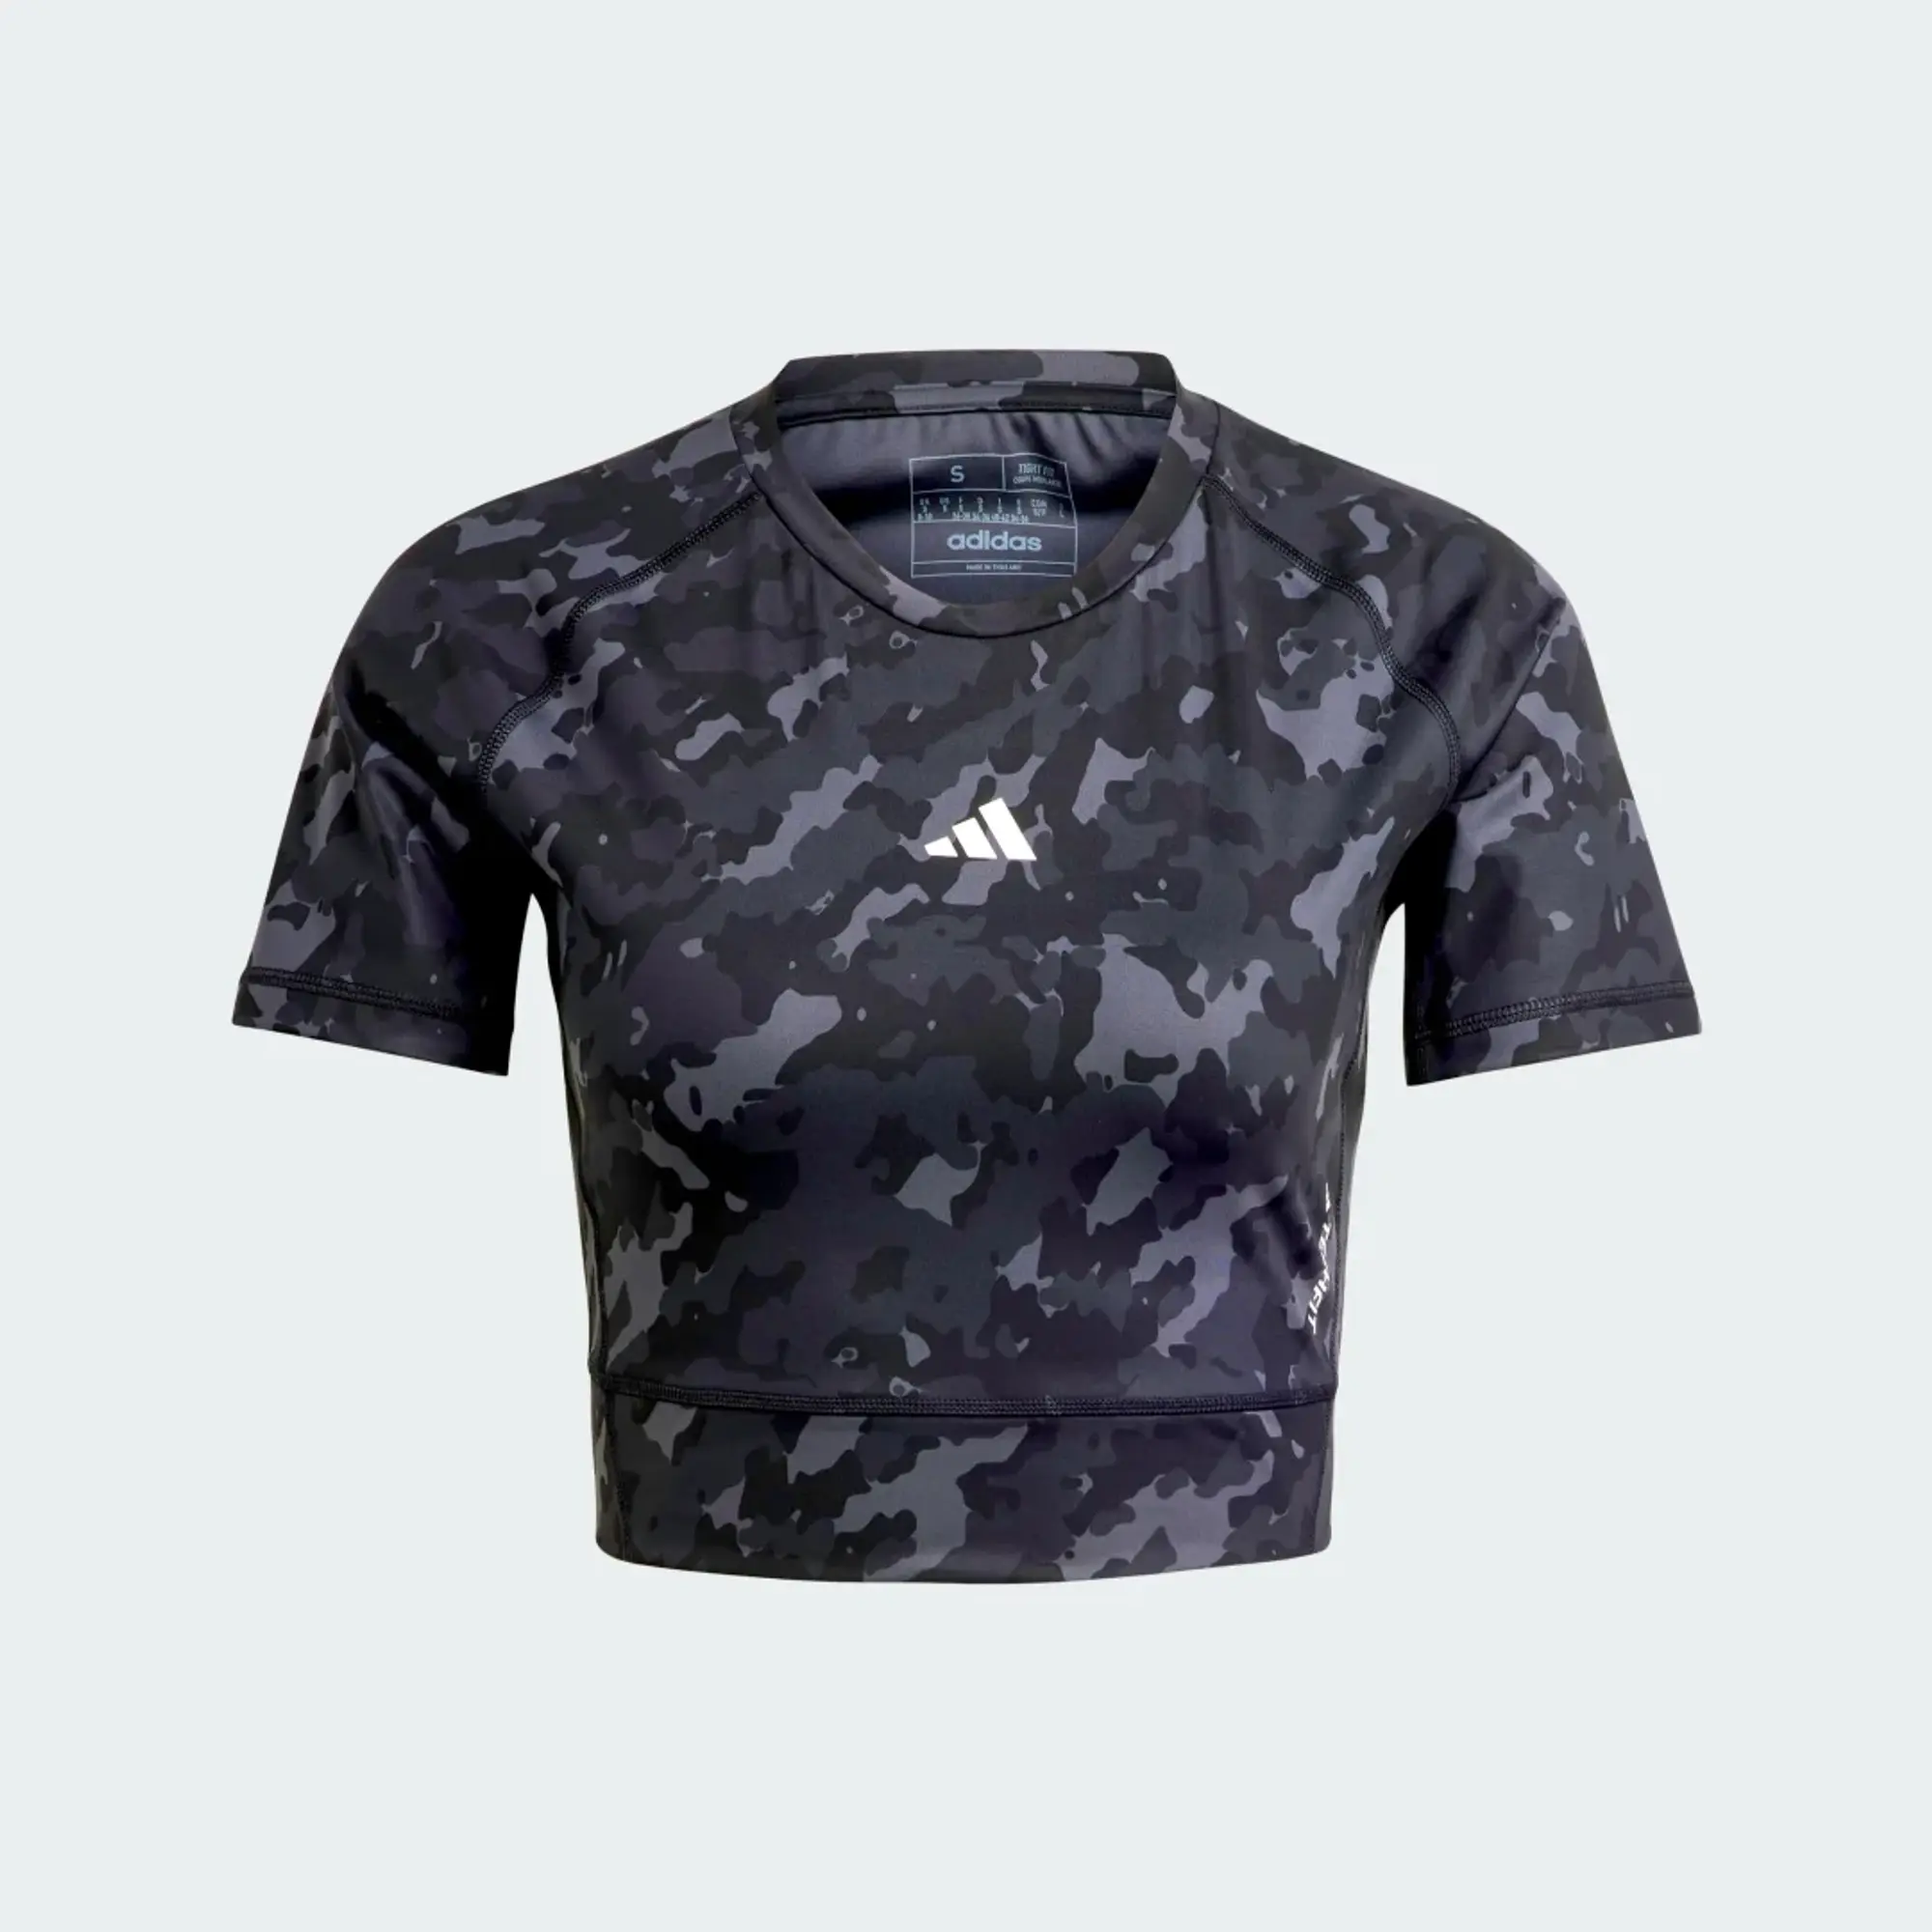 adidas Techfit Camo Print Crop Training T-Shirt - Black / Carbon